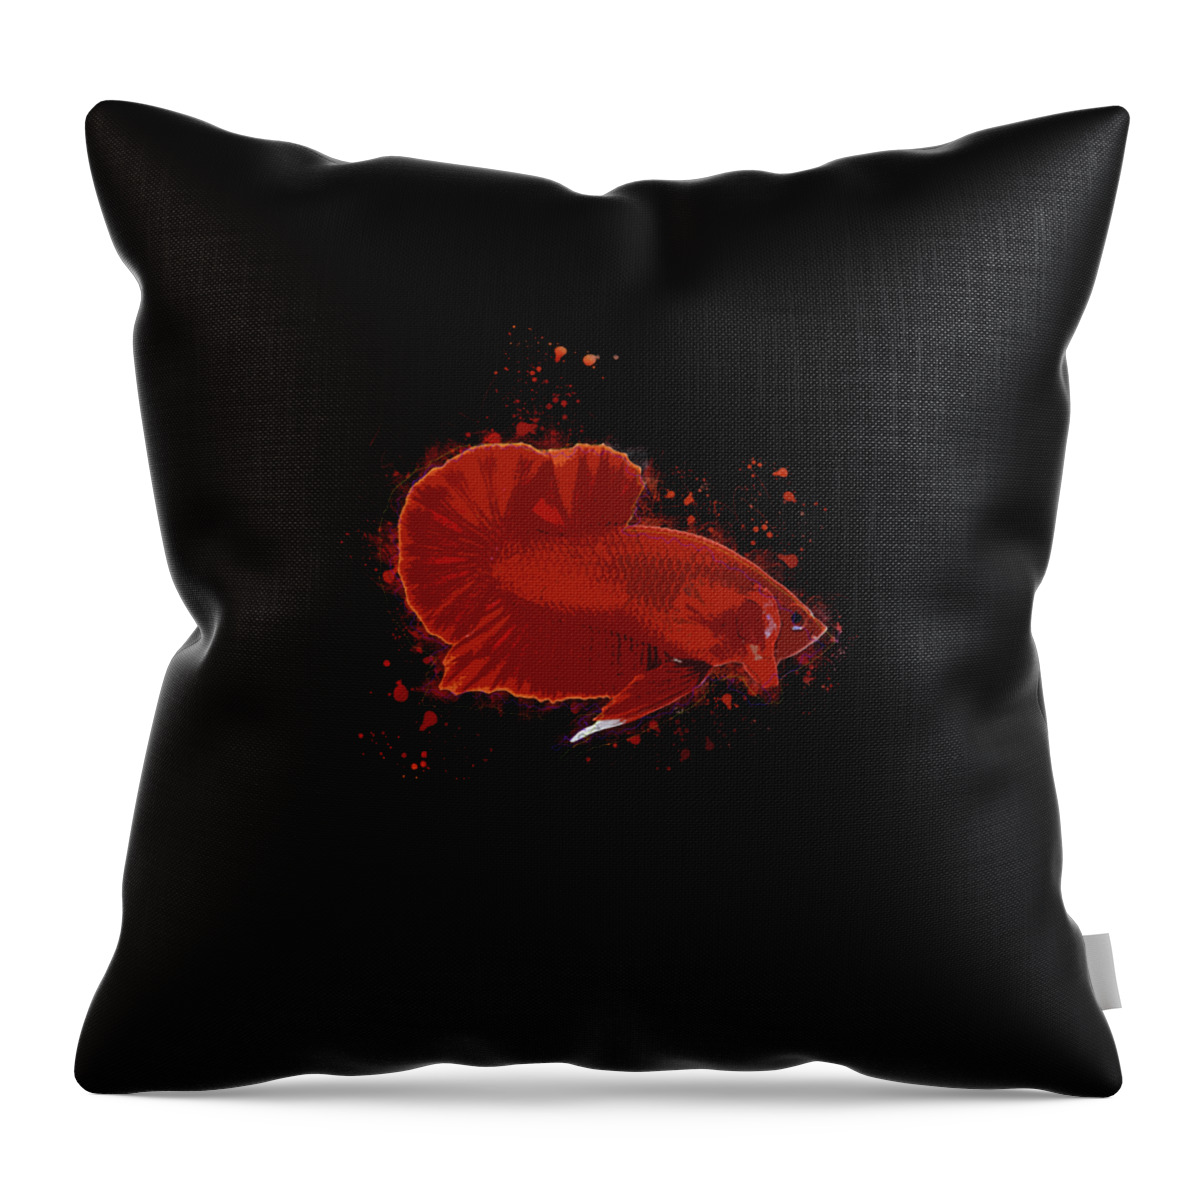 Artistic Throw Pillow featuring the digital art Artistic Super Red Betta Fish by Sambel Pedes